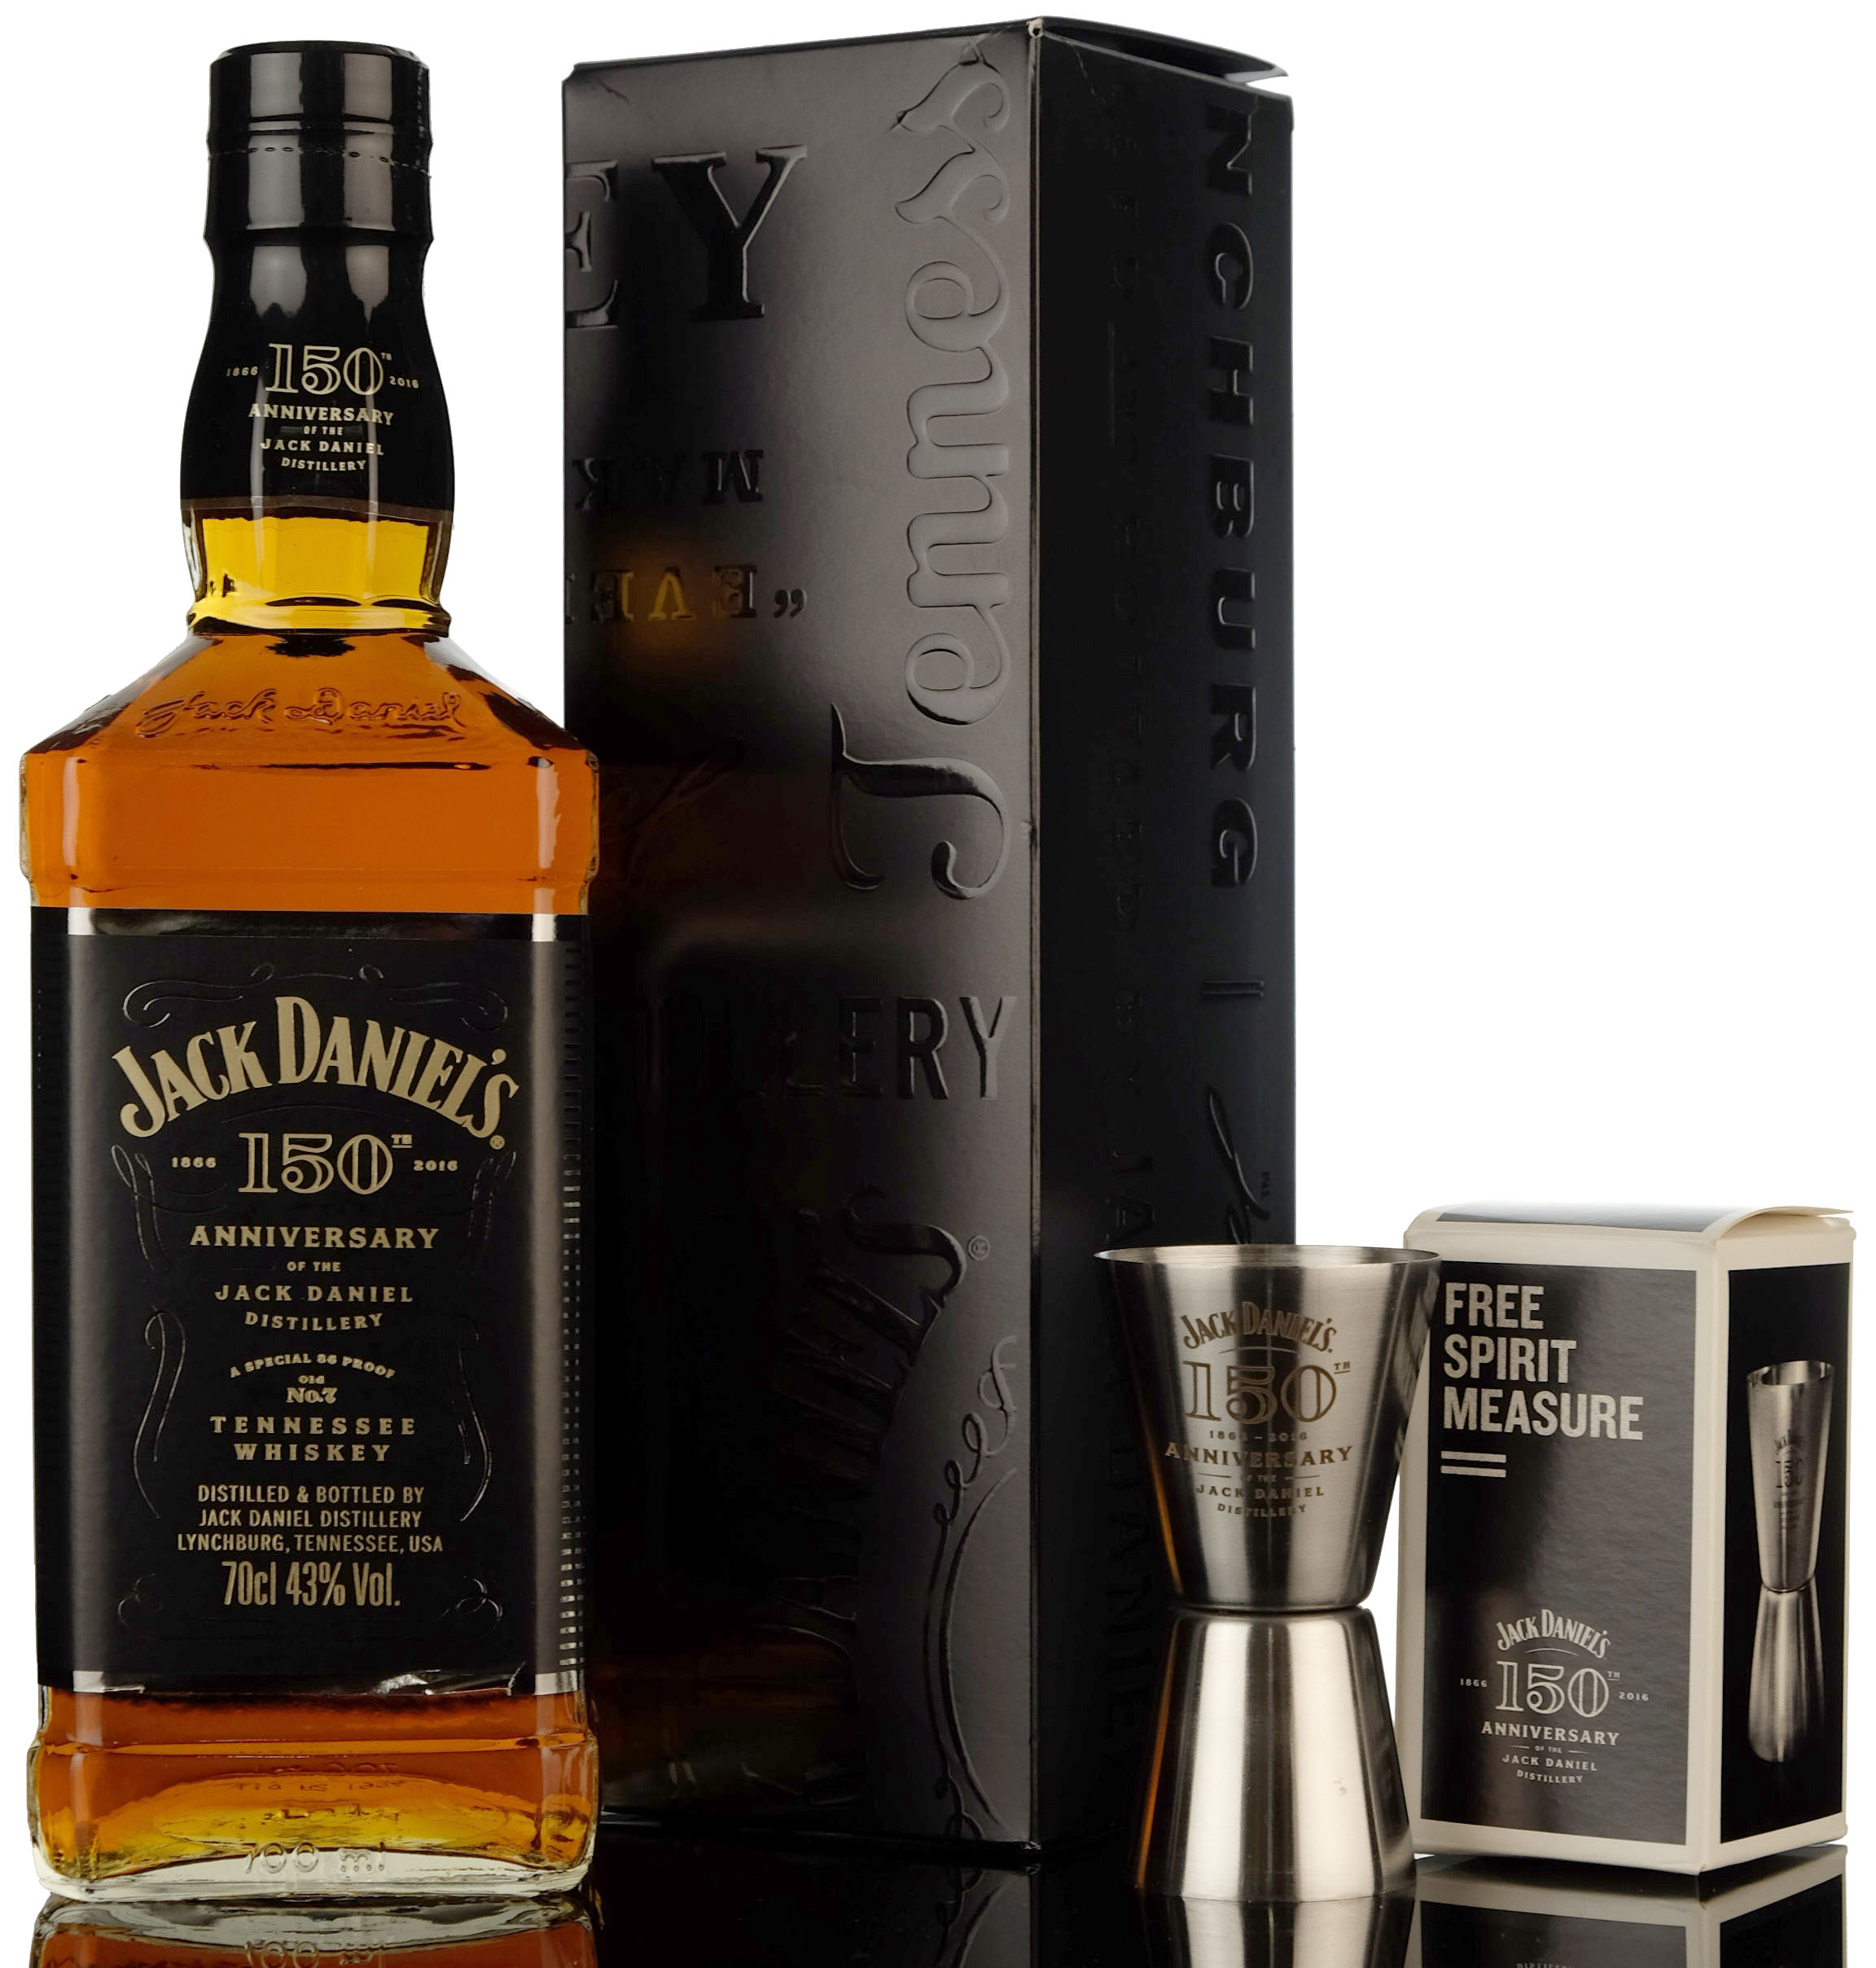 Jack Daniels 150th Anniversary Of The Jack Daniels Distillery - 2016 Release